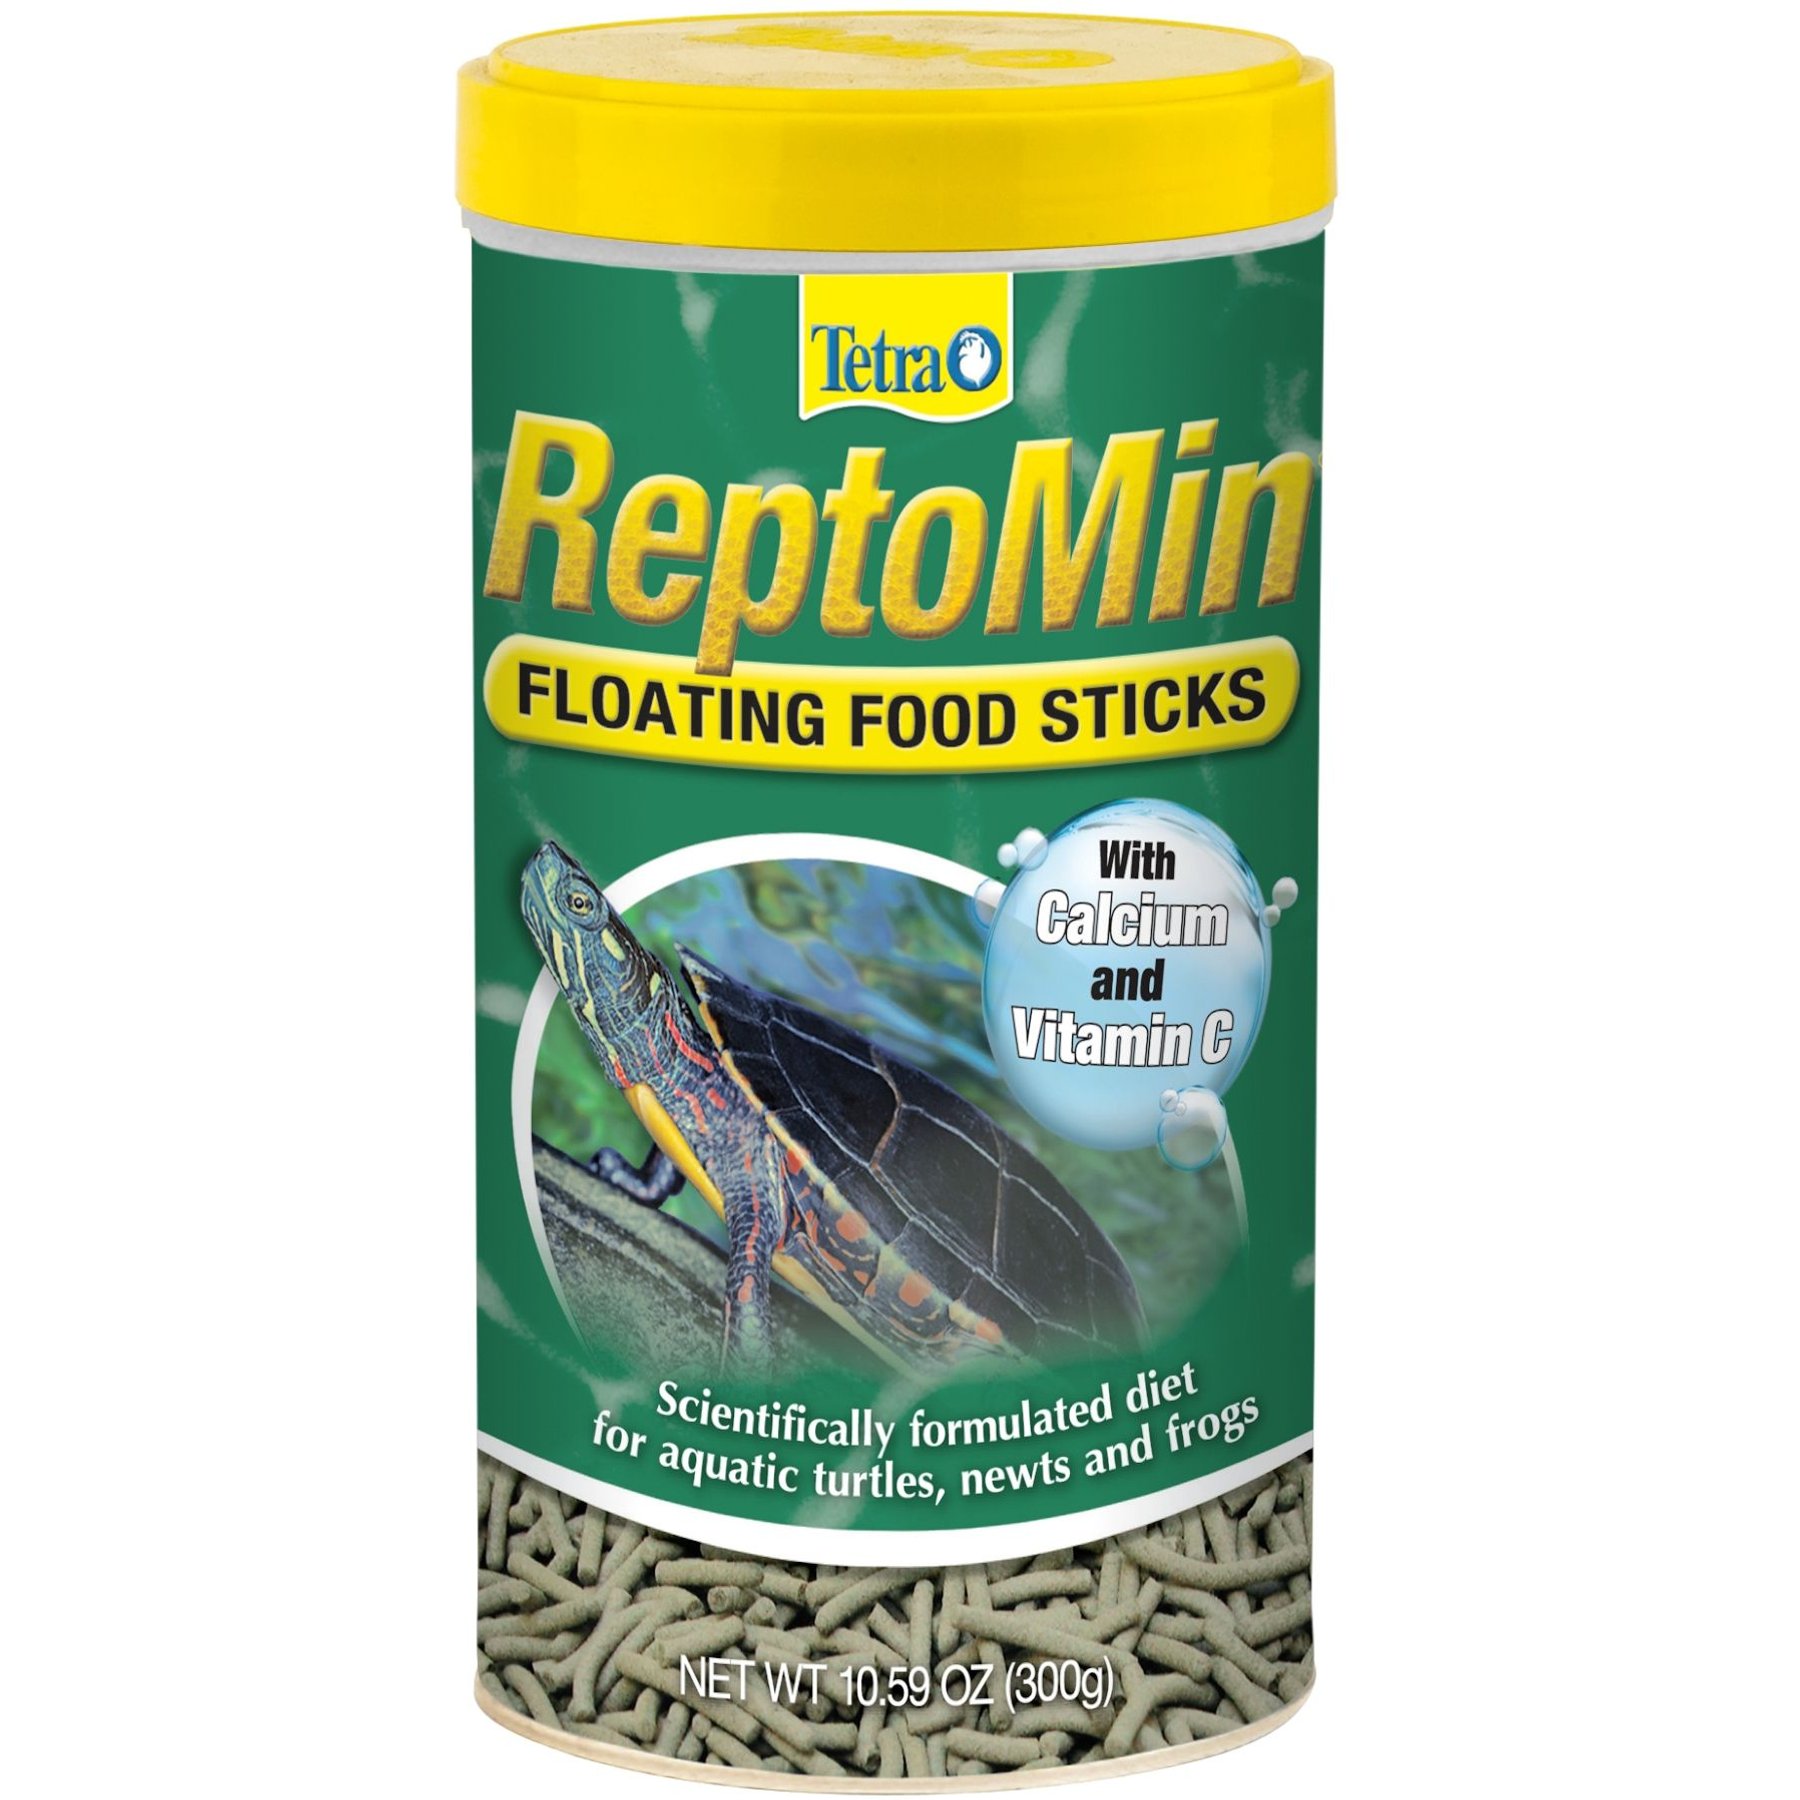 Tetra ReptoMin Floating Food Sticks - 3.7 oz jar